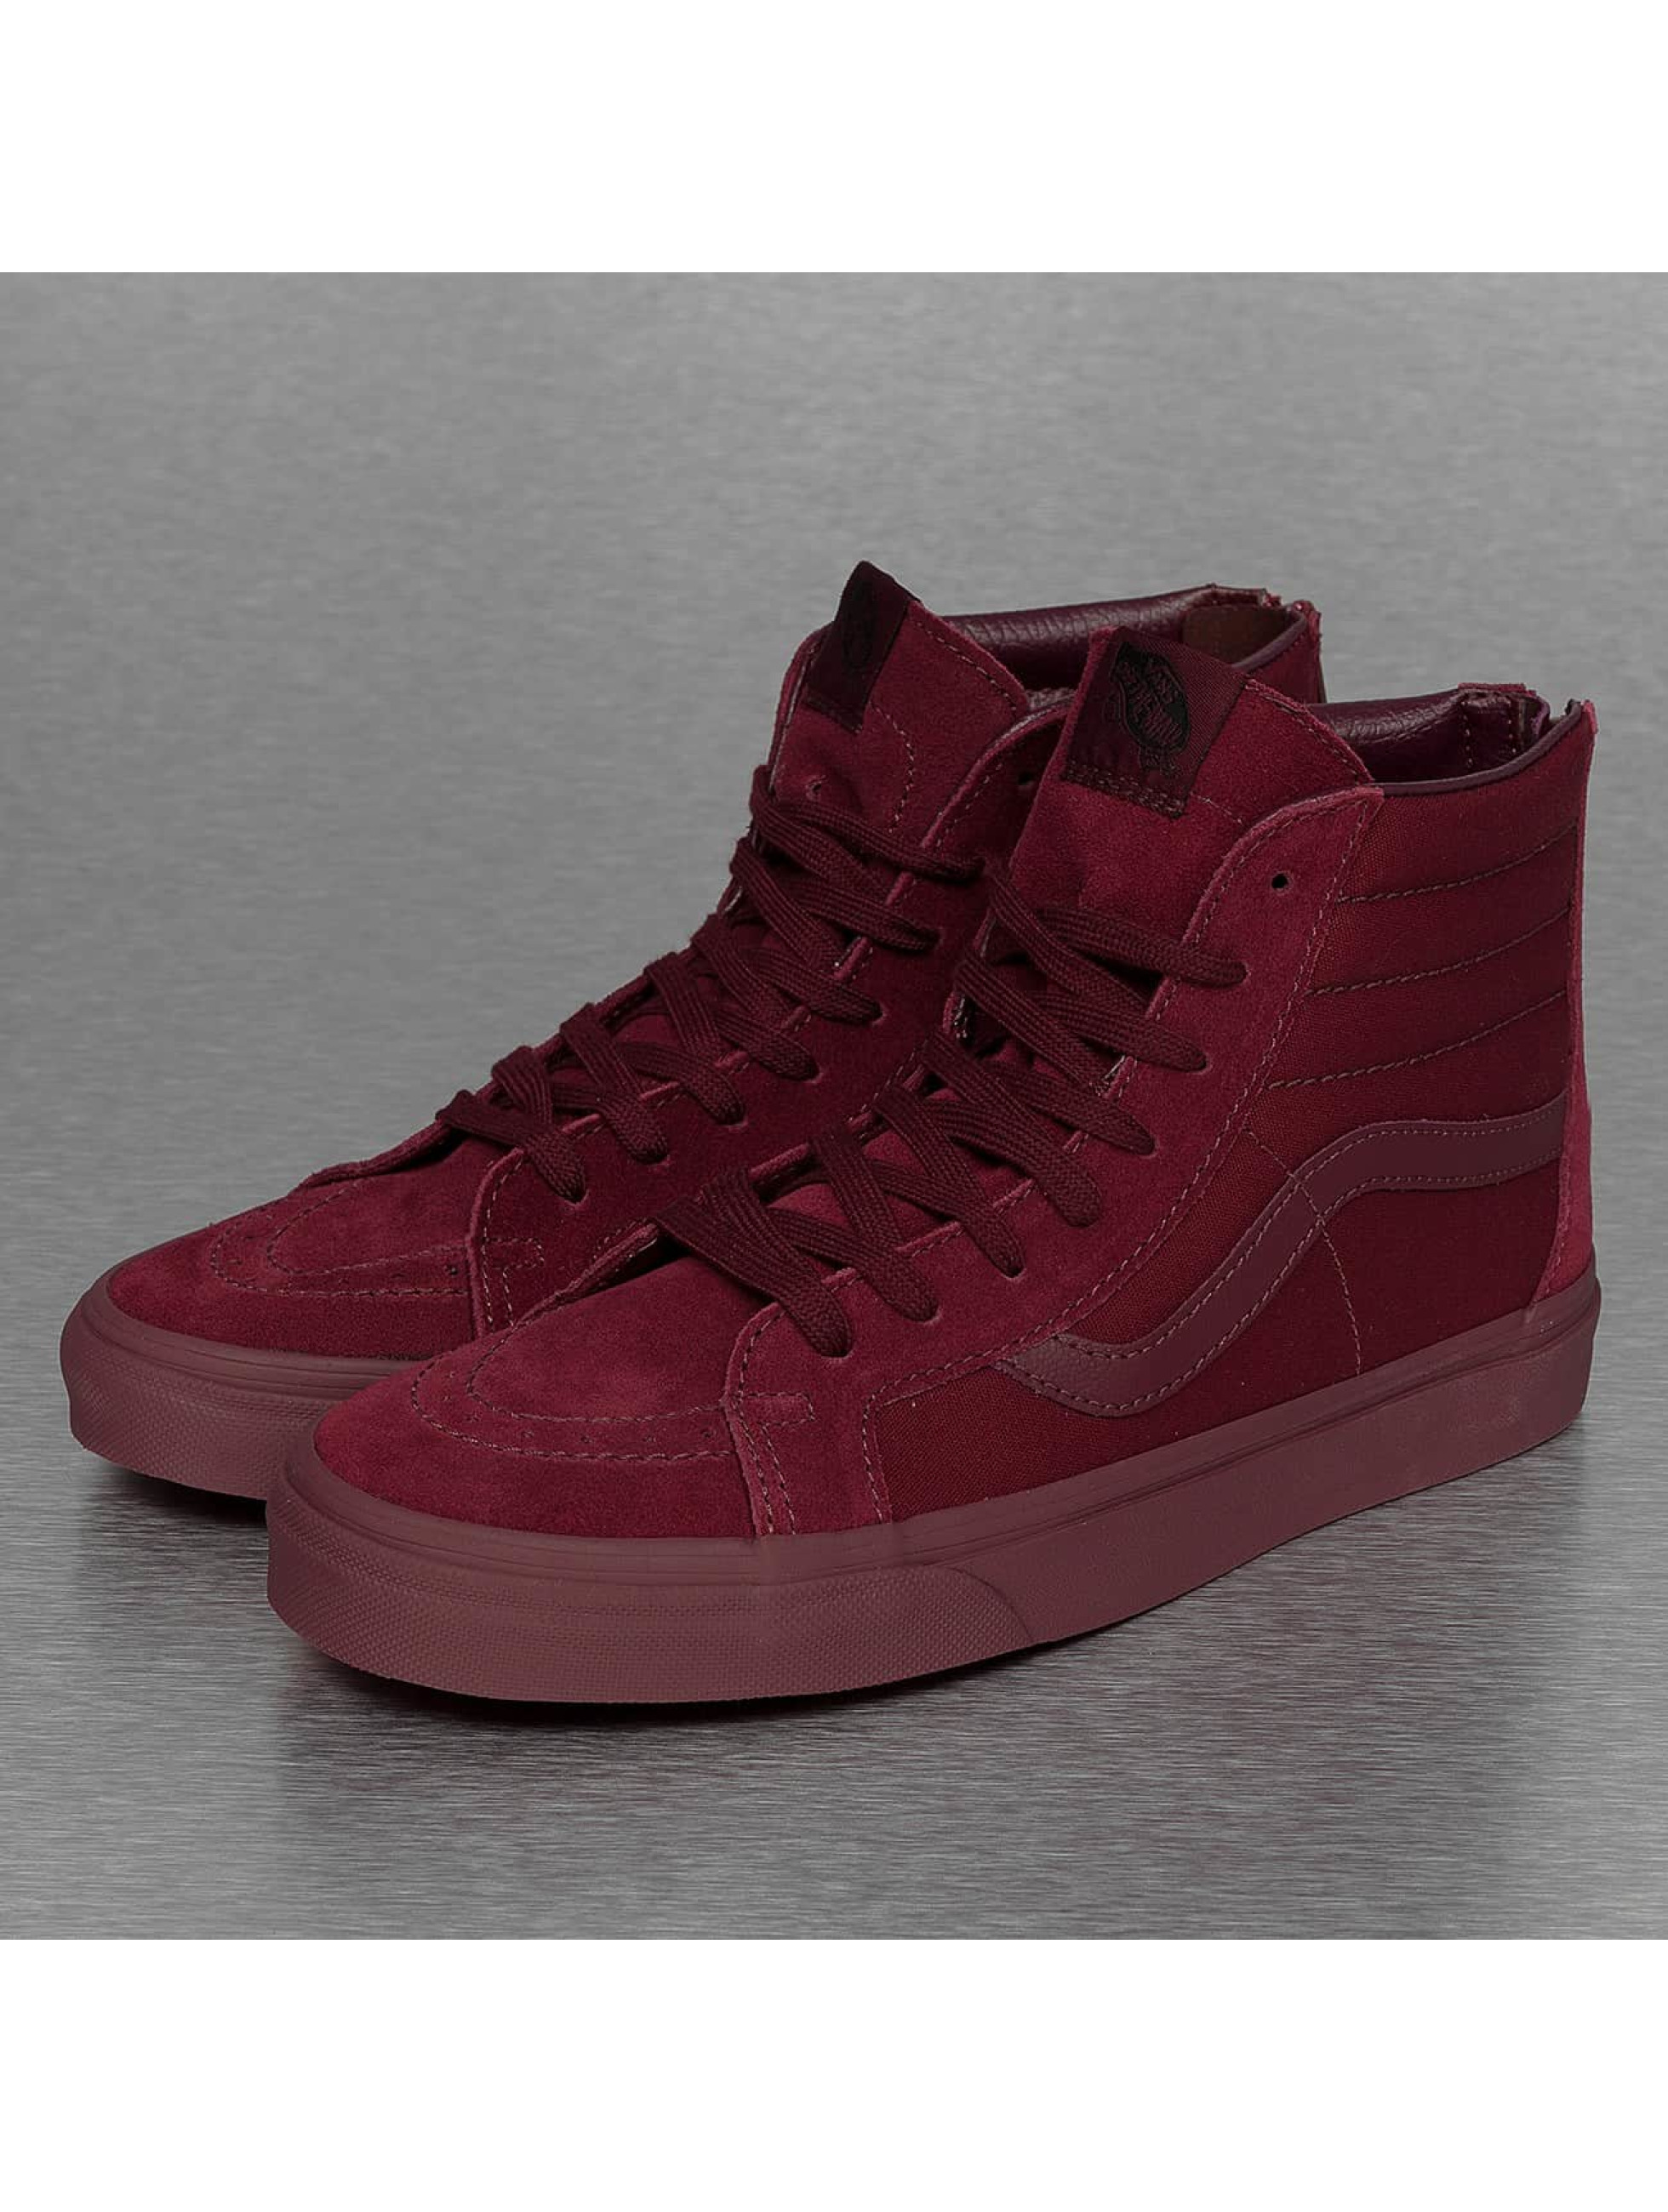 Chaussures / Baskets SK8-Hi Reissue Zip en rouge